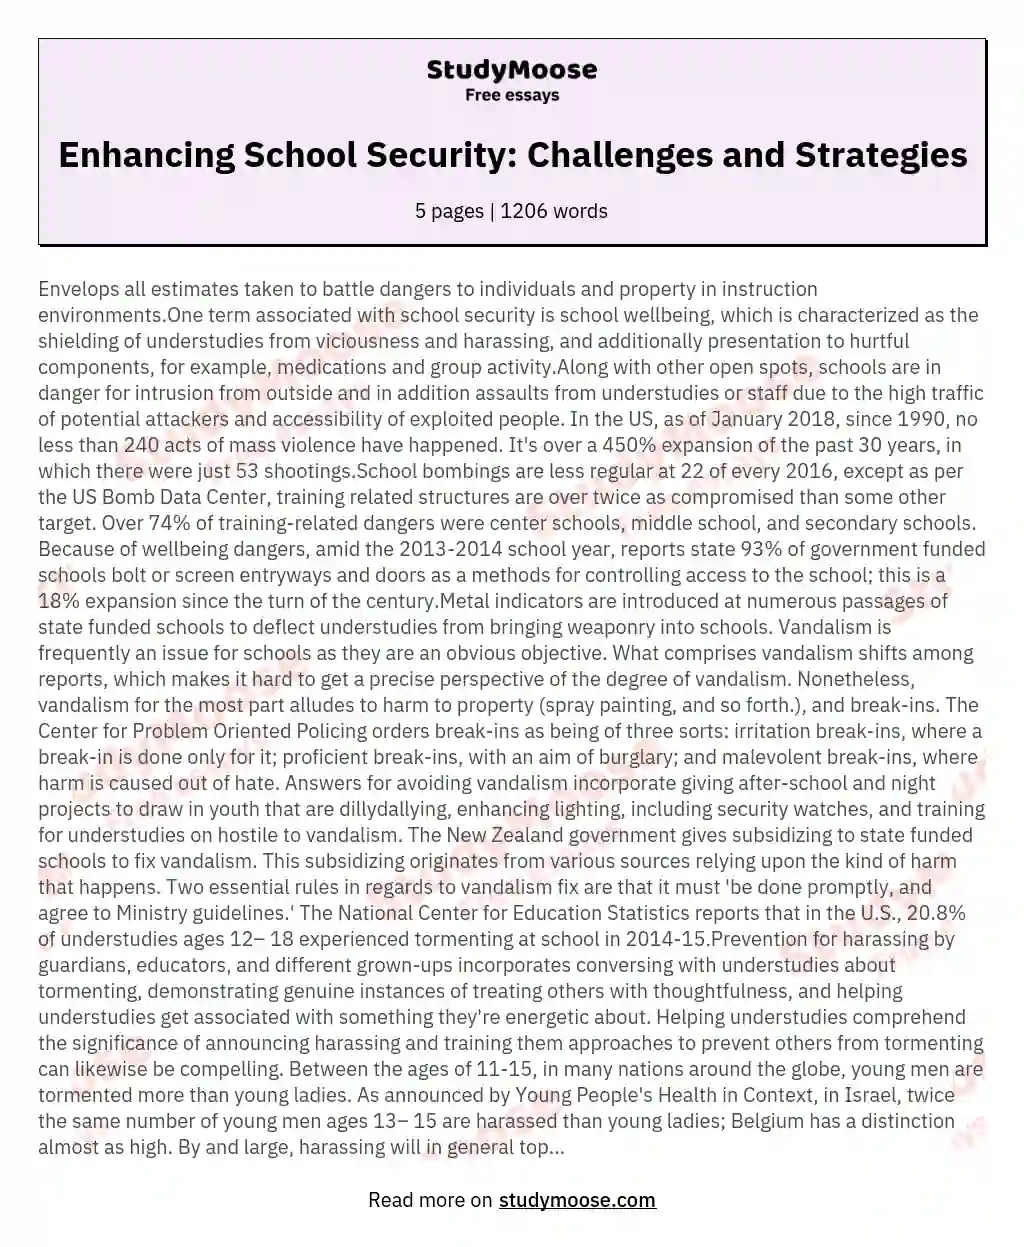 Enhancing School Security: Challenges and Strategies essay